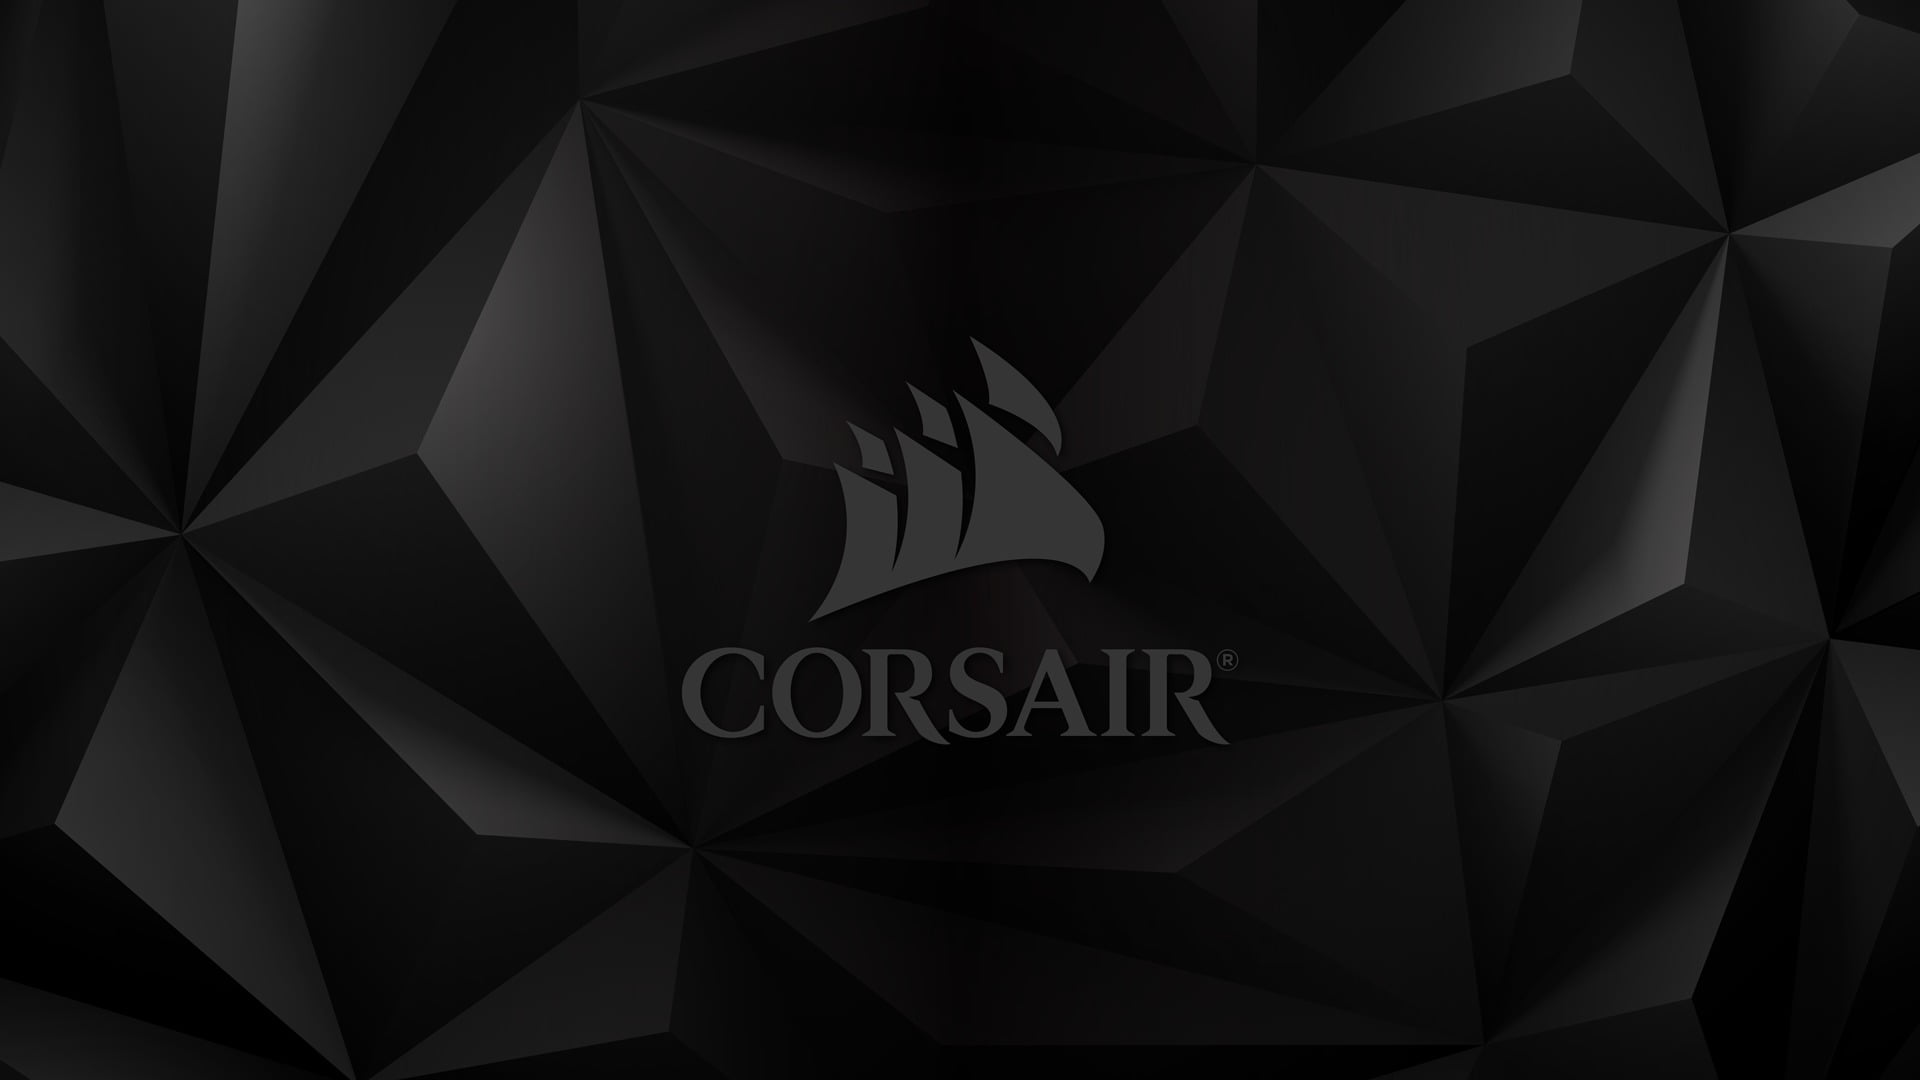 Corsair logo, PC gaming, hardware, technology, computer, brand